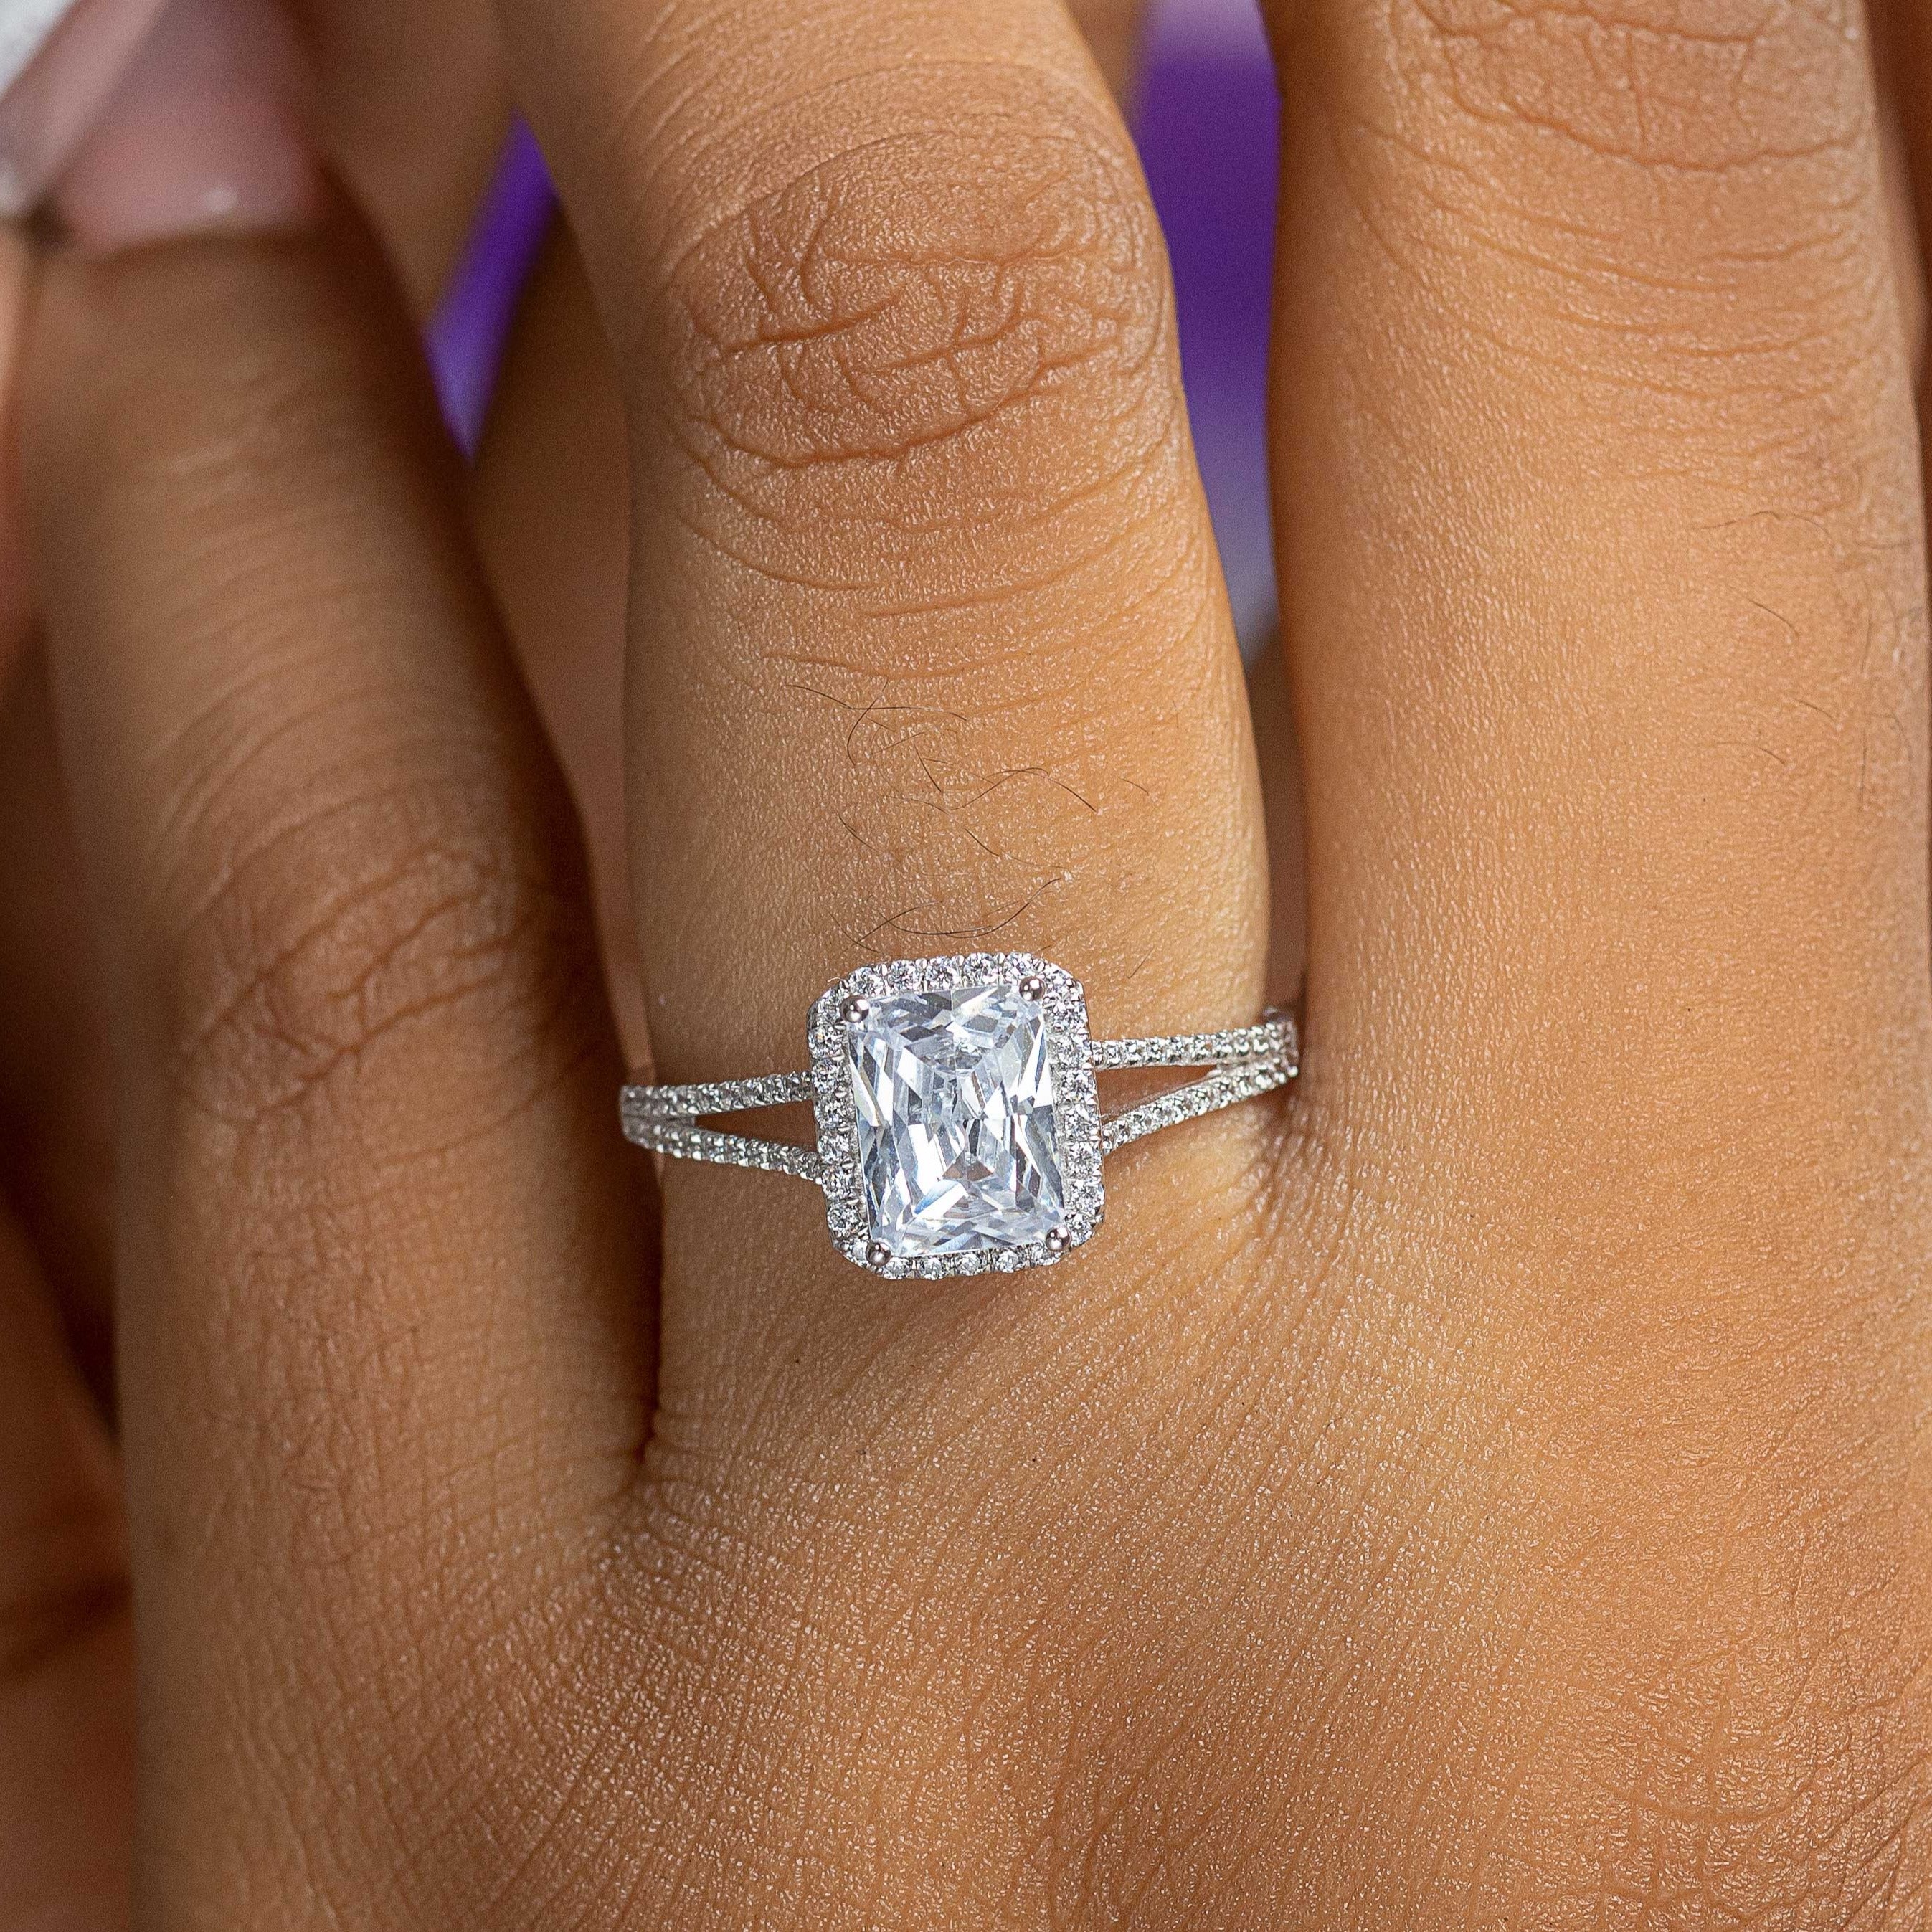 Massive price of Katrina Kaif's wedding ring revealed - News -  IndiaGlitz.com